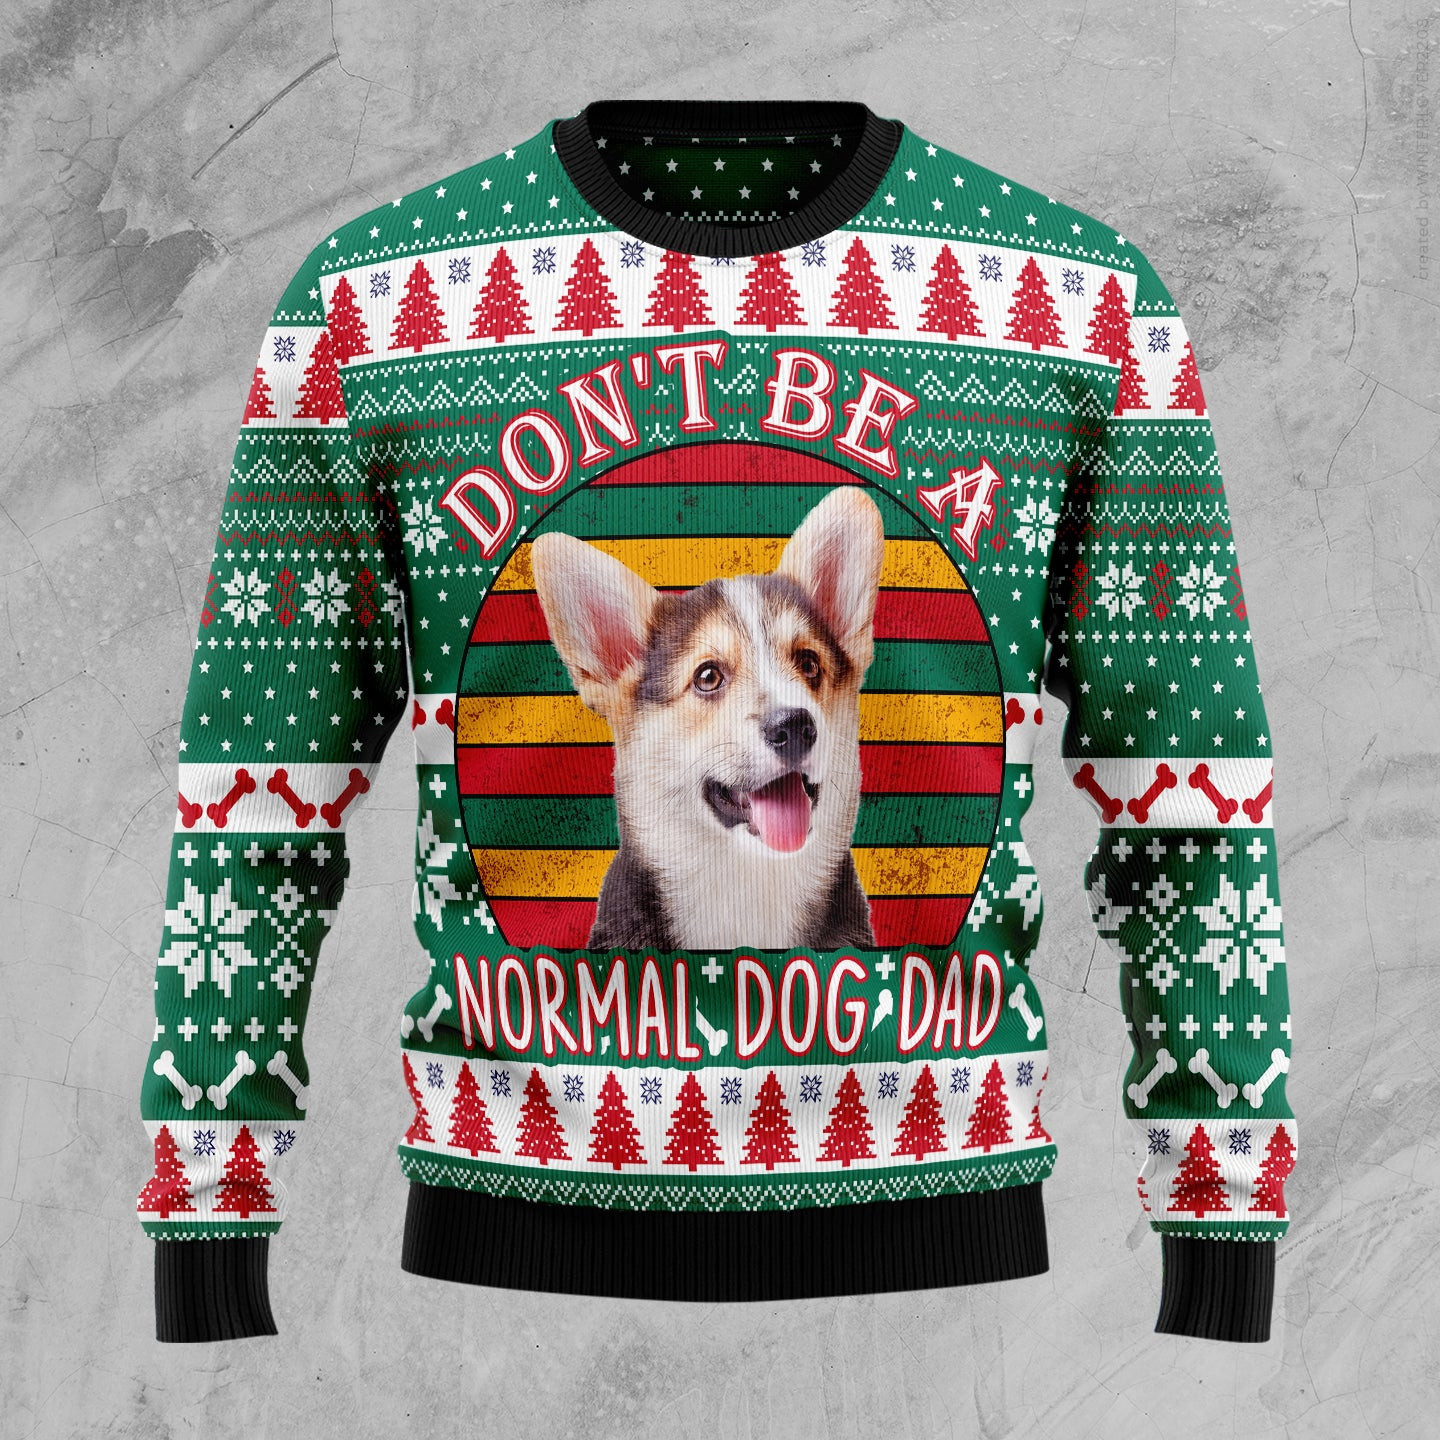 Welsh Corgi Dog Dad Ugly Christmas Sweater